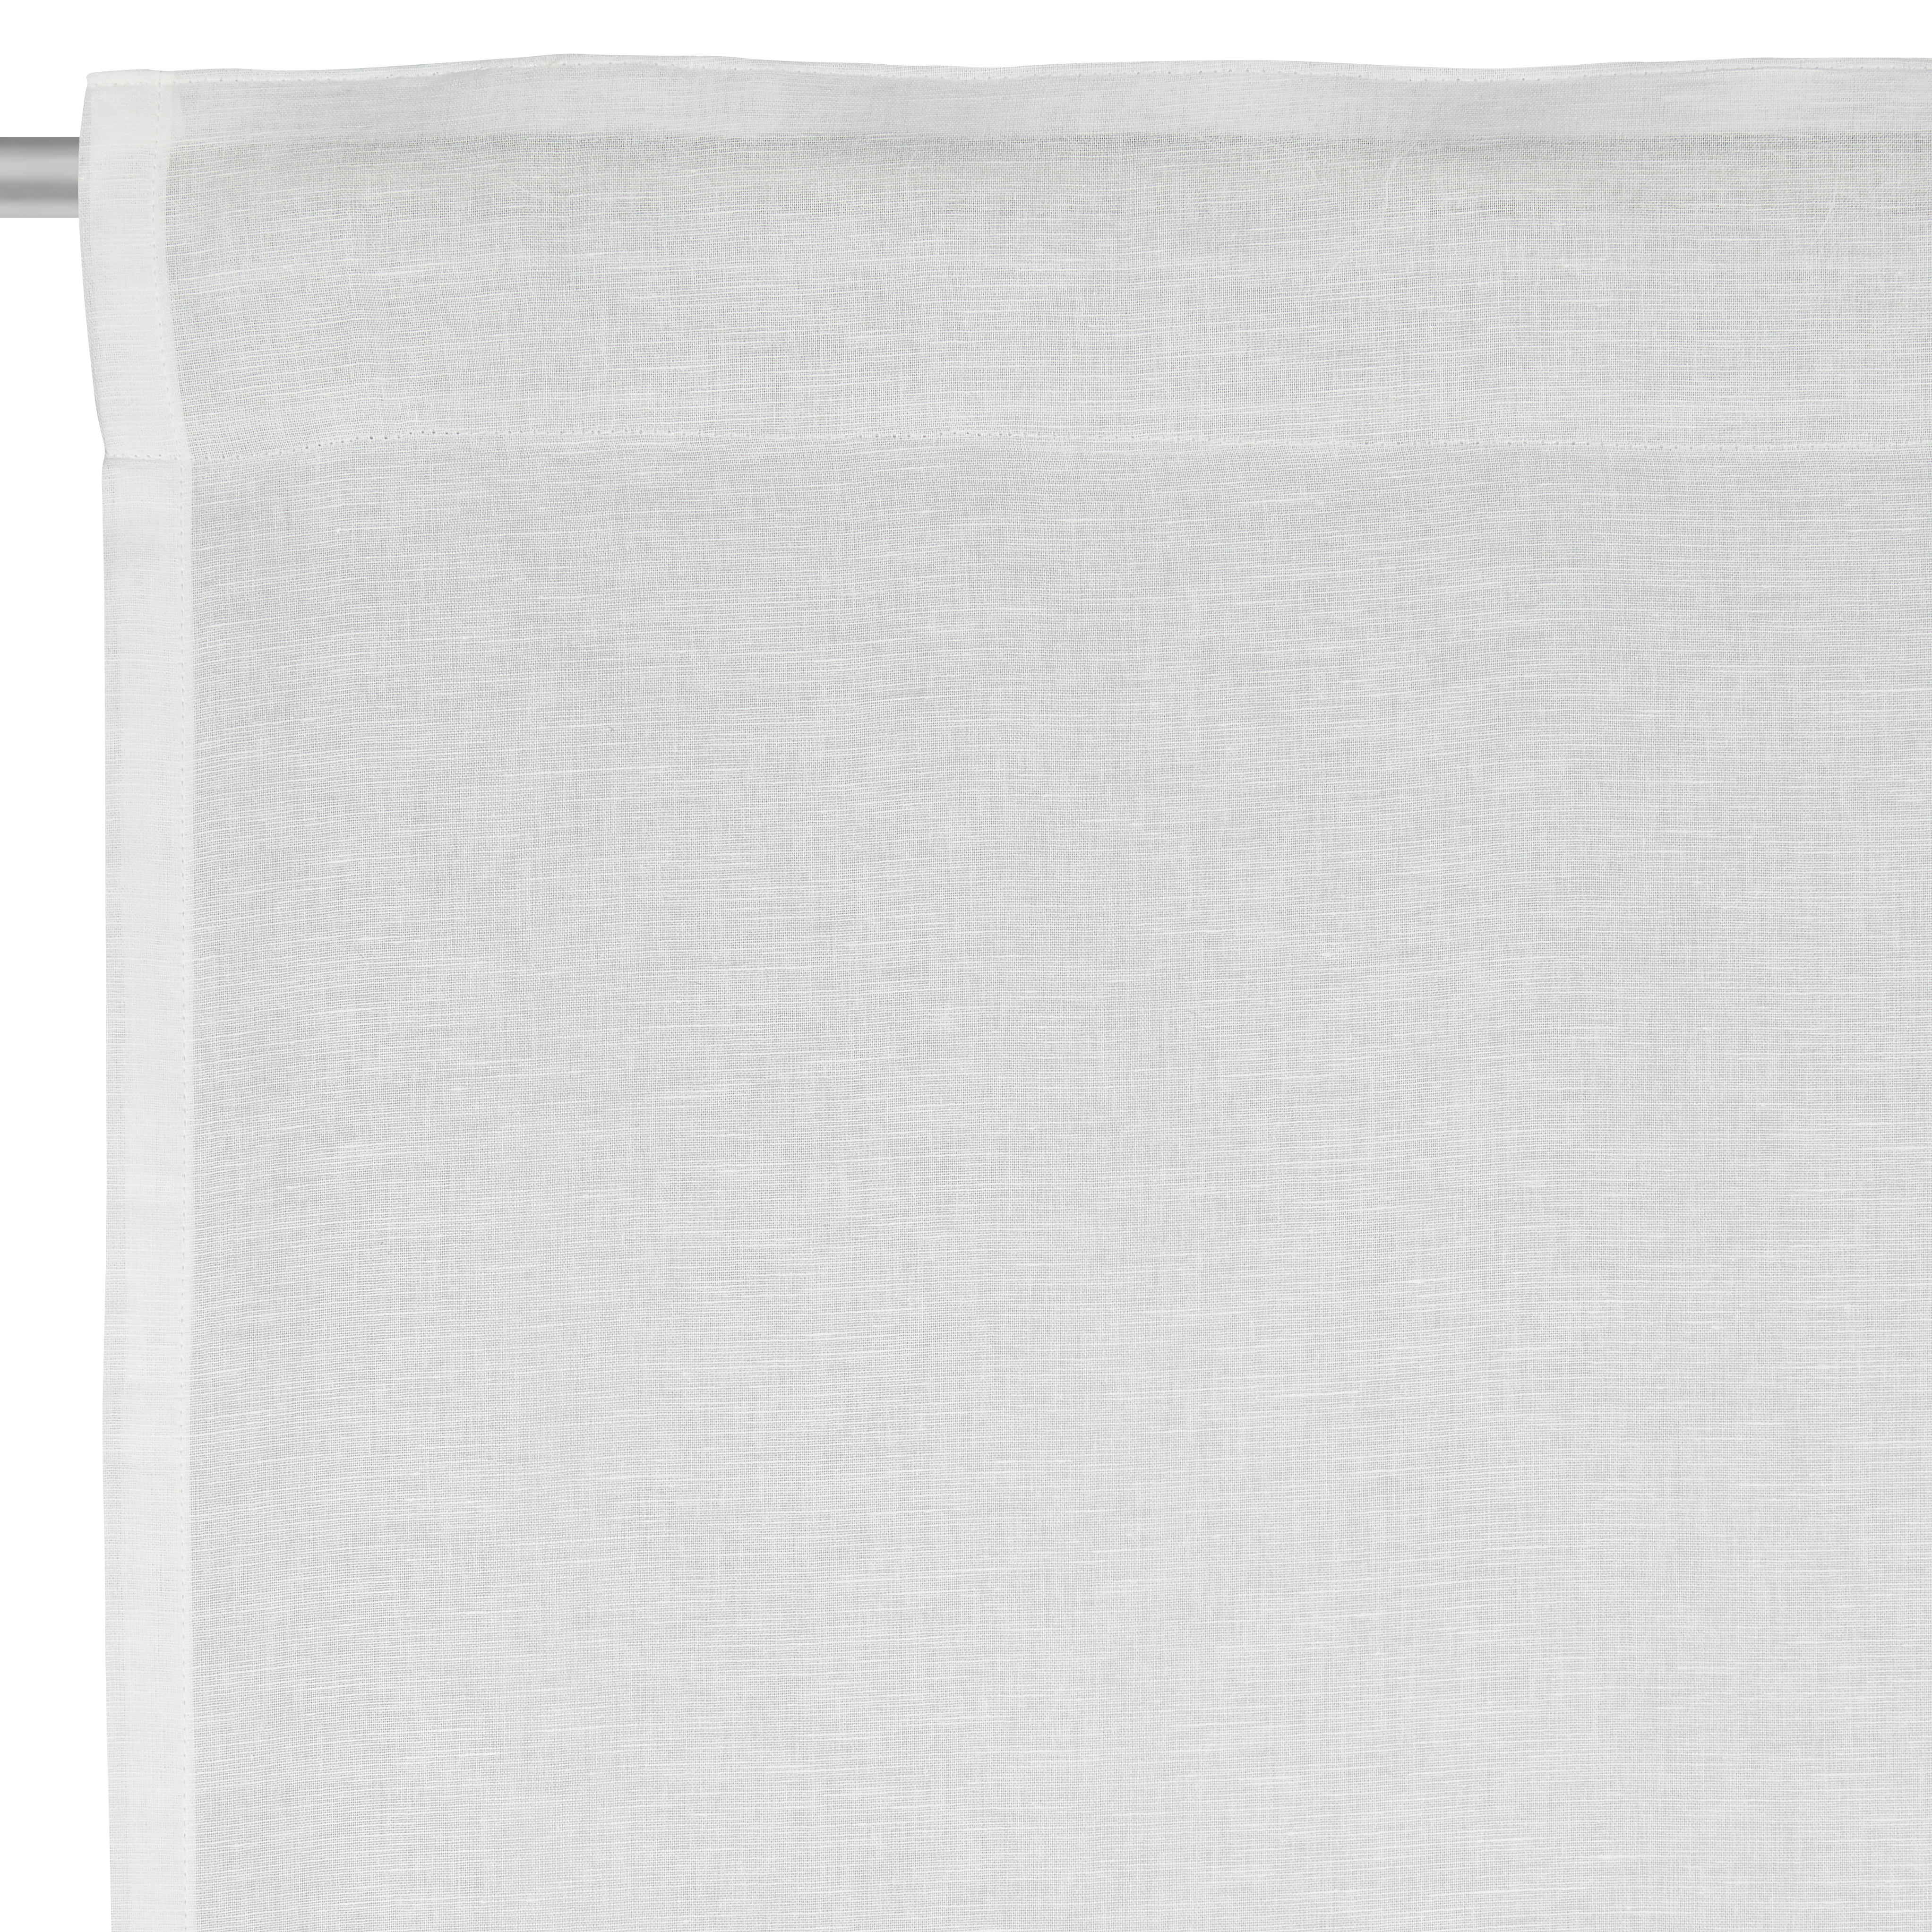 FERTIGVORHANG halbtransparent  - Weiß, LIFESTYLE, Textil (140/255cm) - Bio:Vio